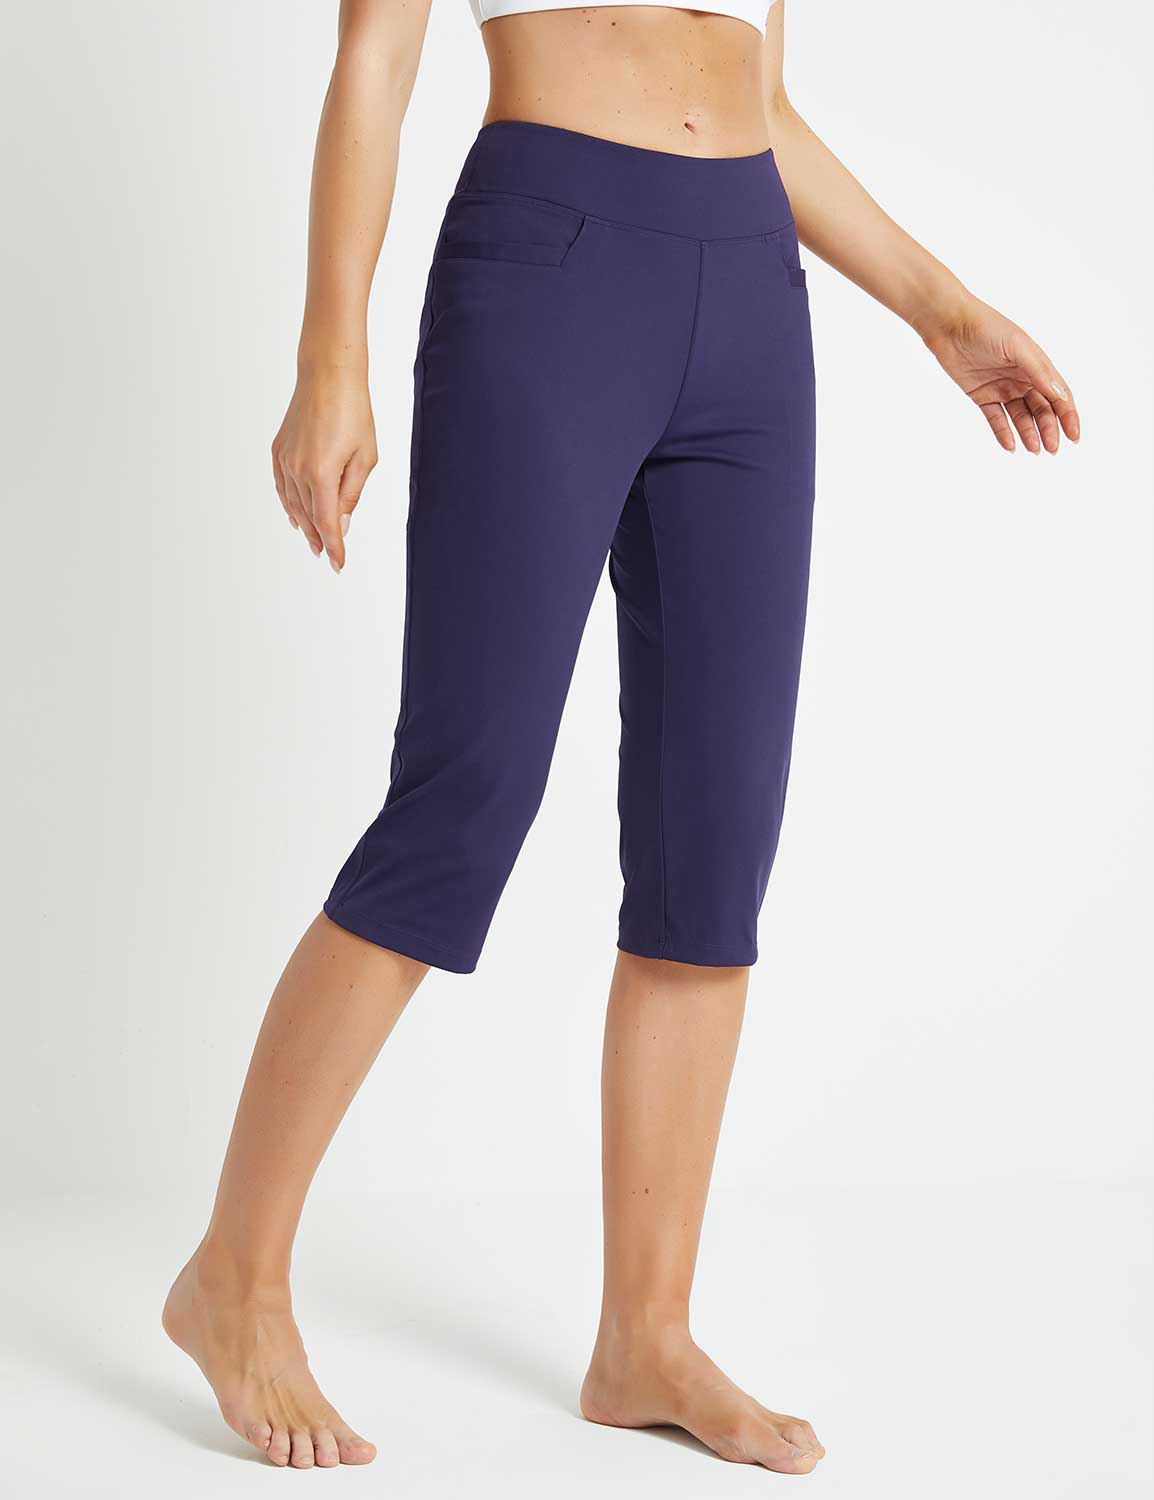 Baleaf Pants Womens XL Black Tight Fit Leggings Yoga Workout Athletic  Pockets